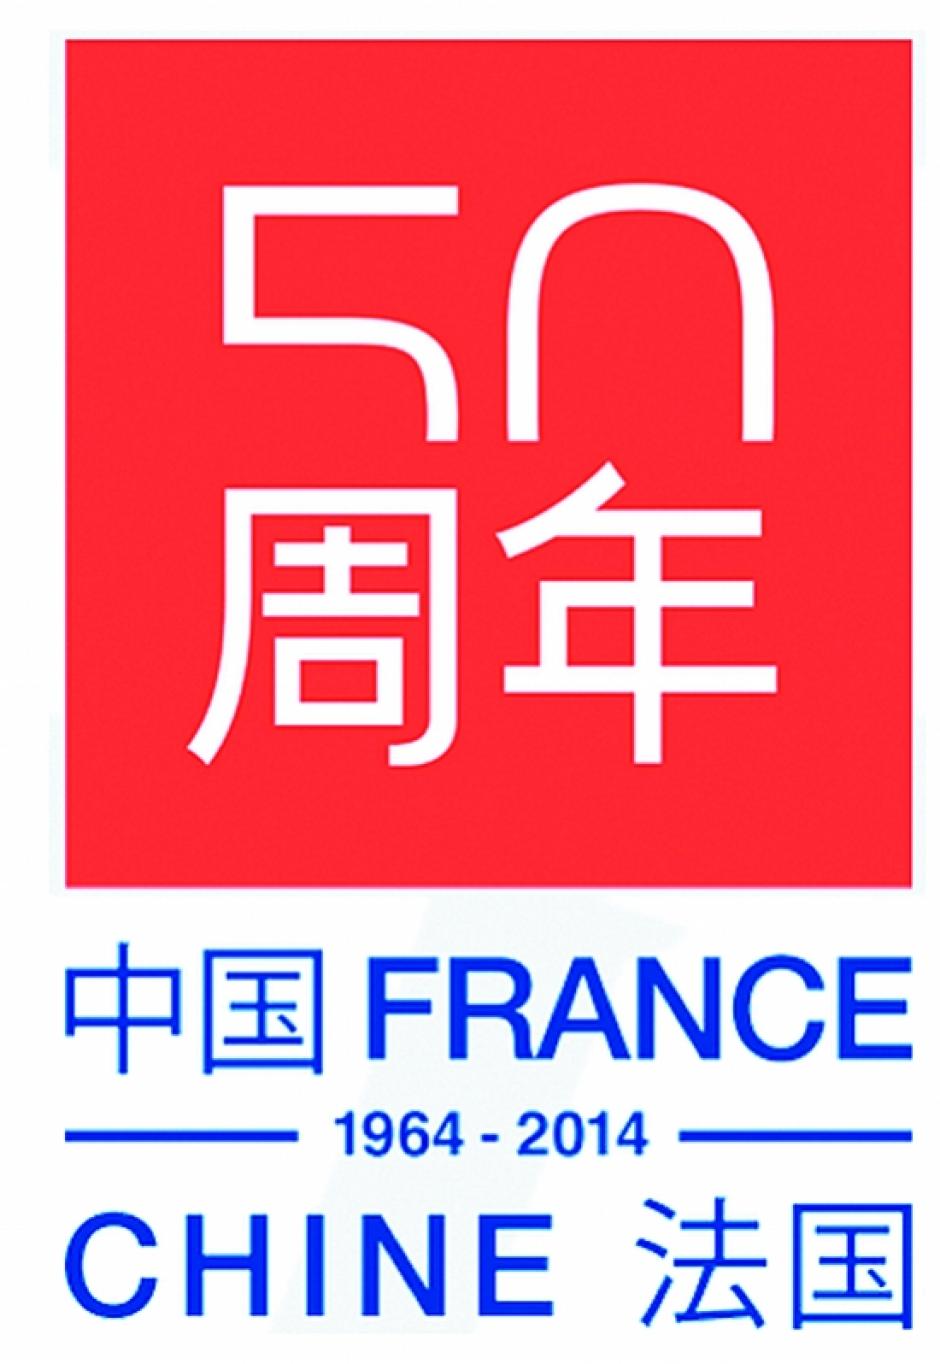 50e anniversaire des relations franco/chinoises